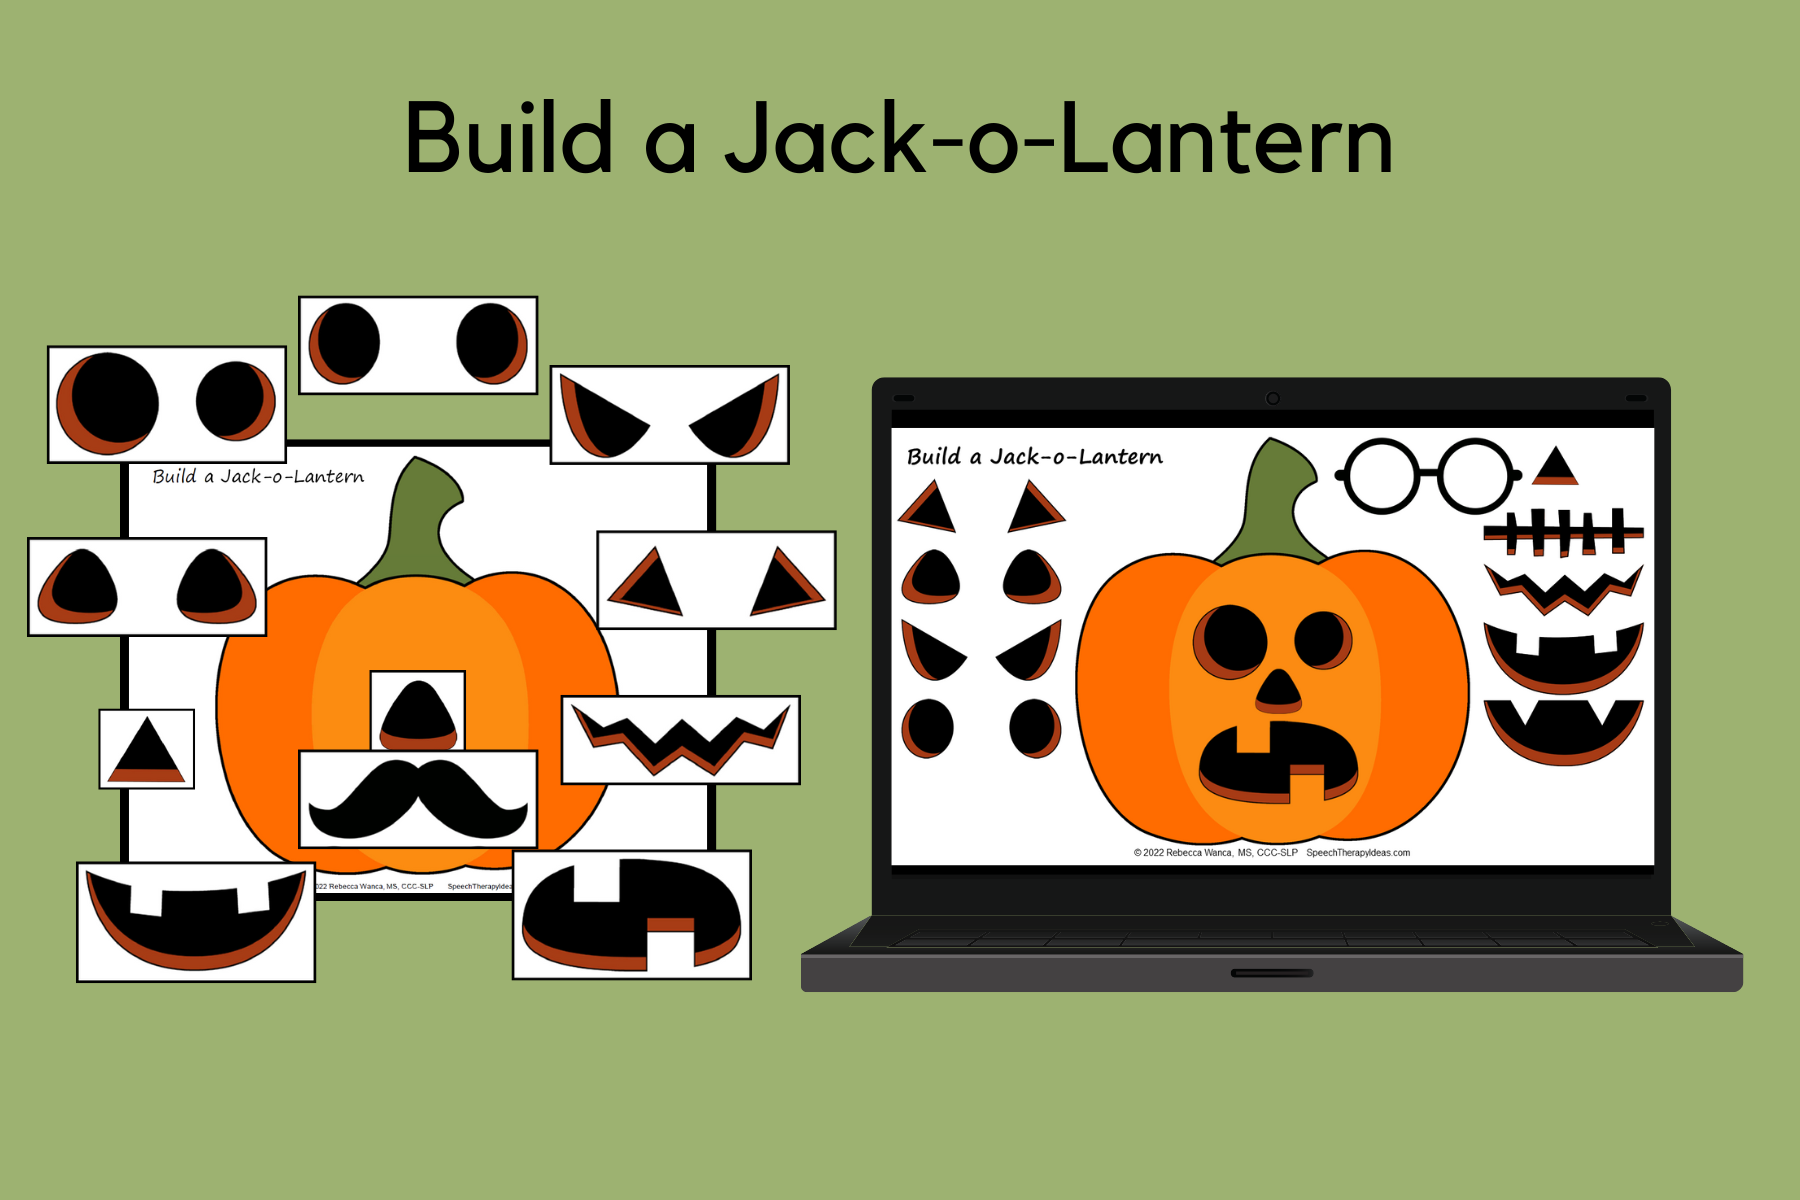 Build a Jack-o-Lantern